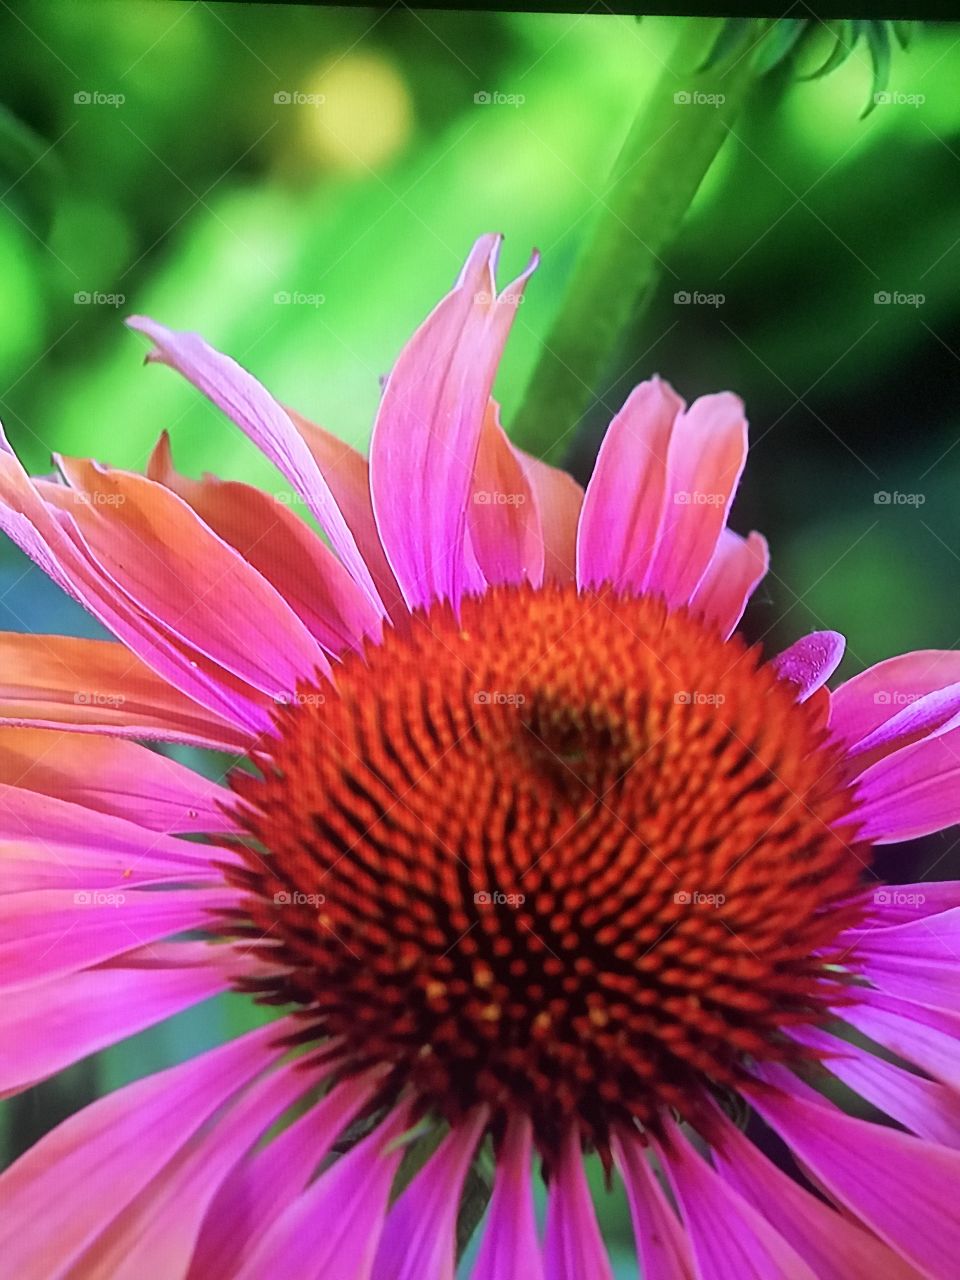 Amazing flower